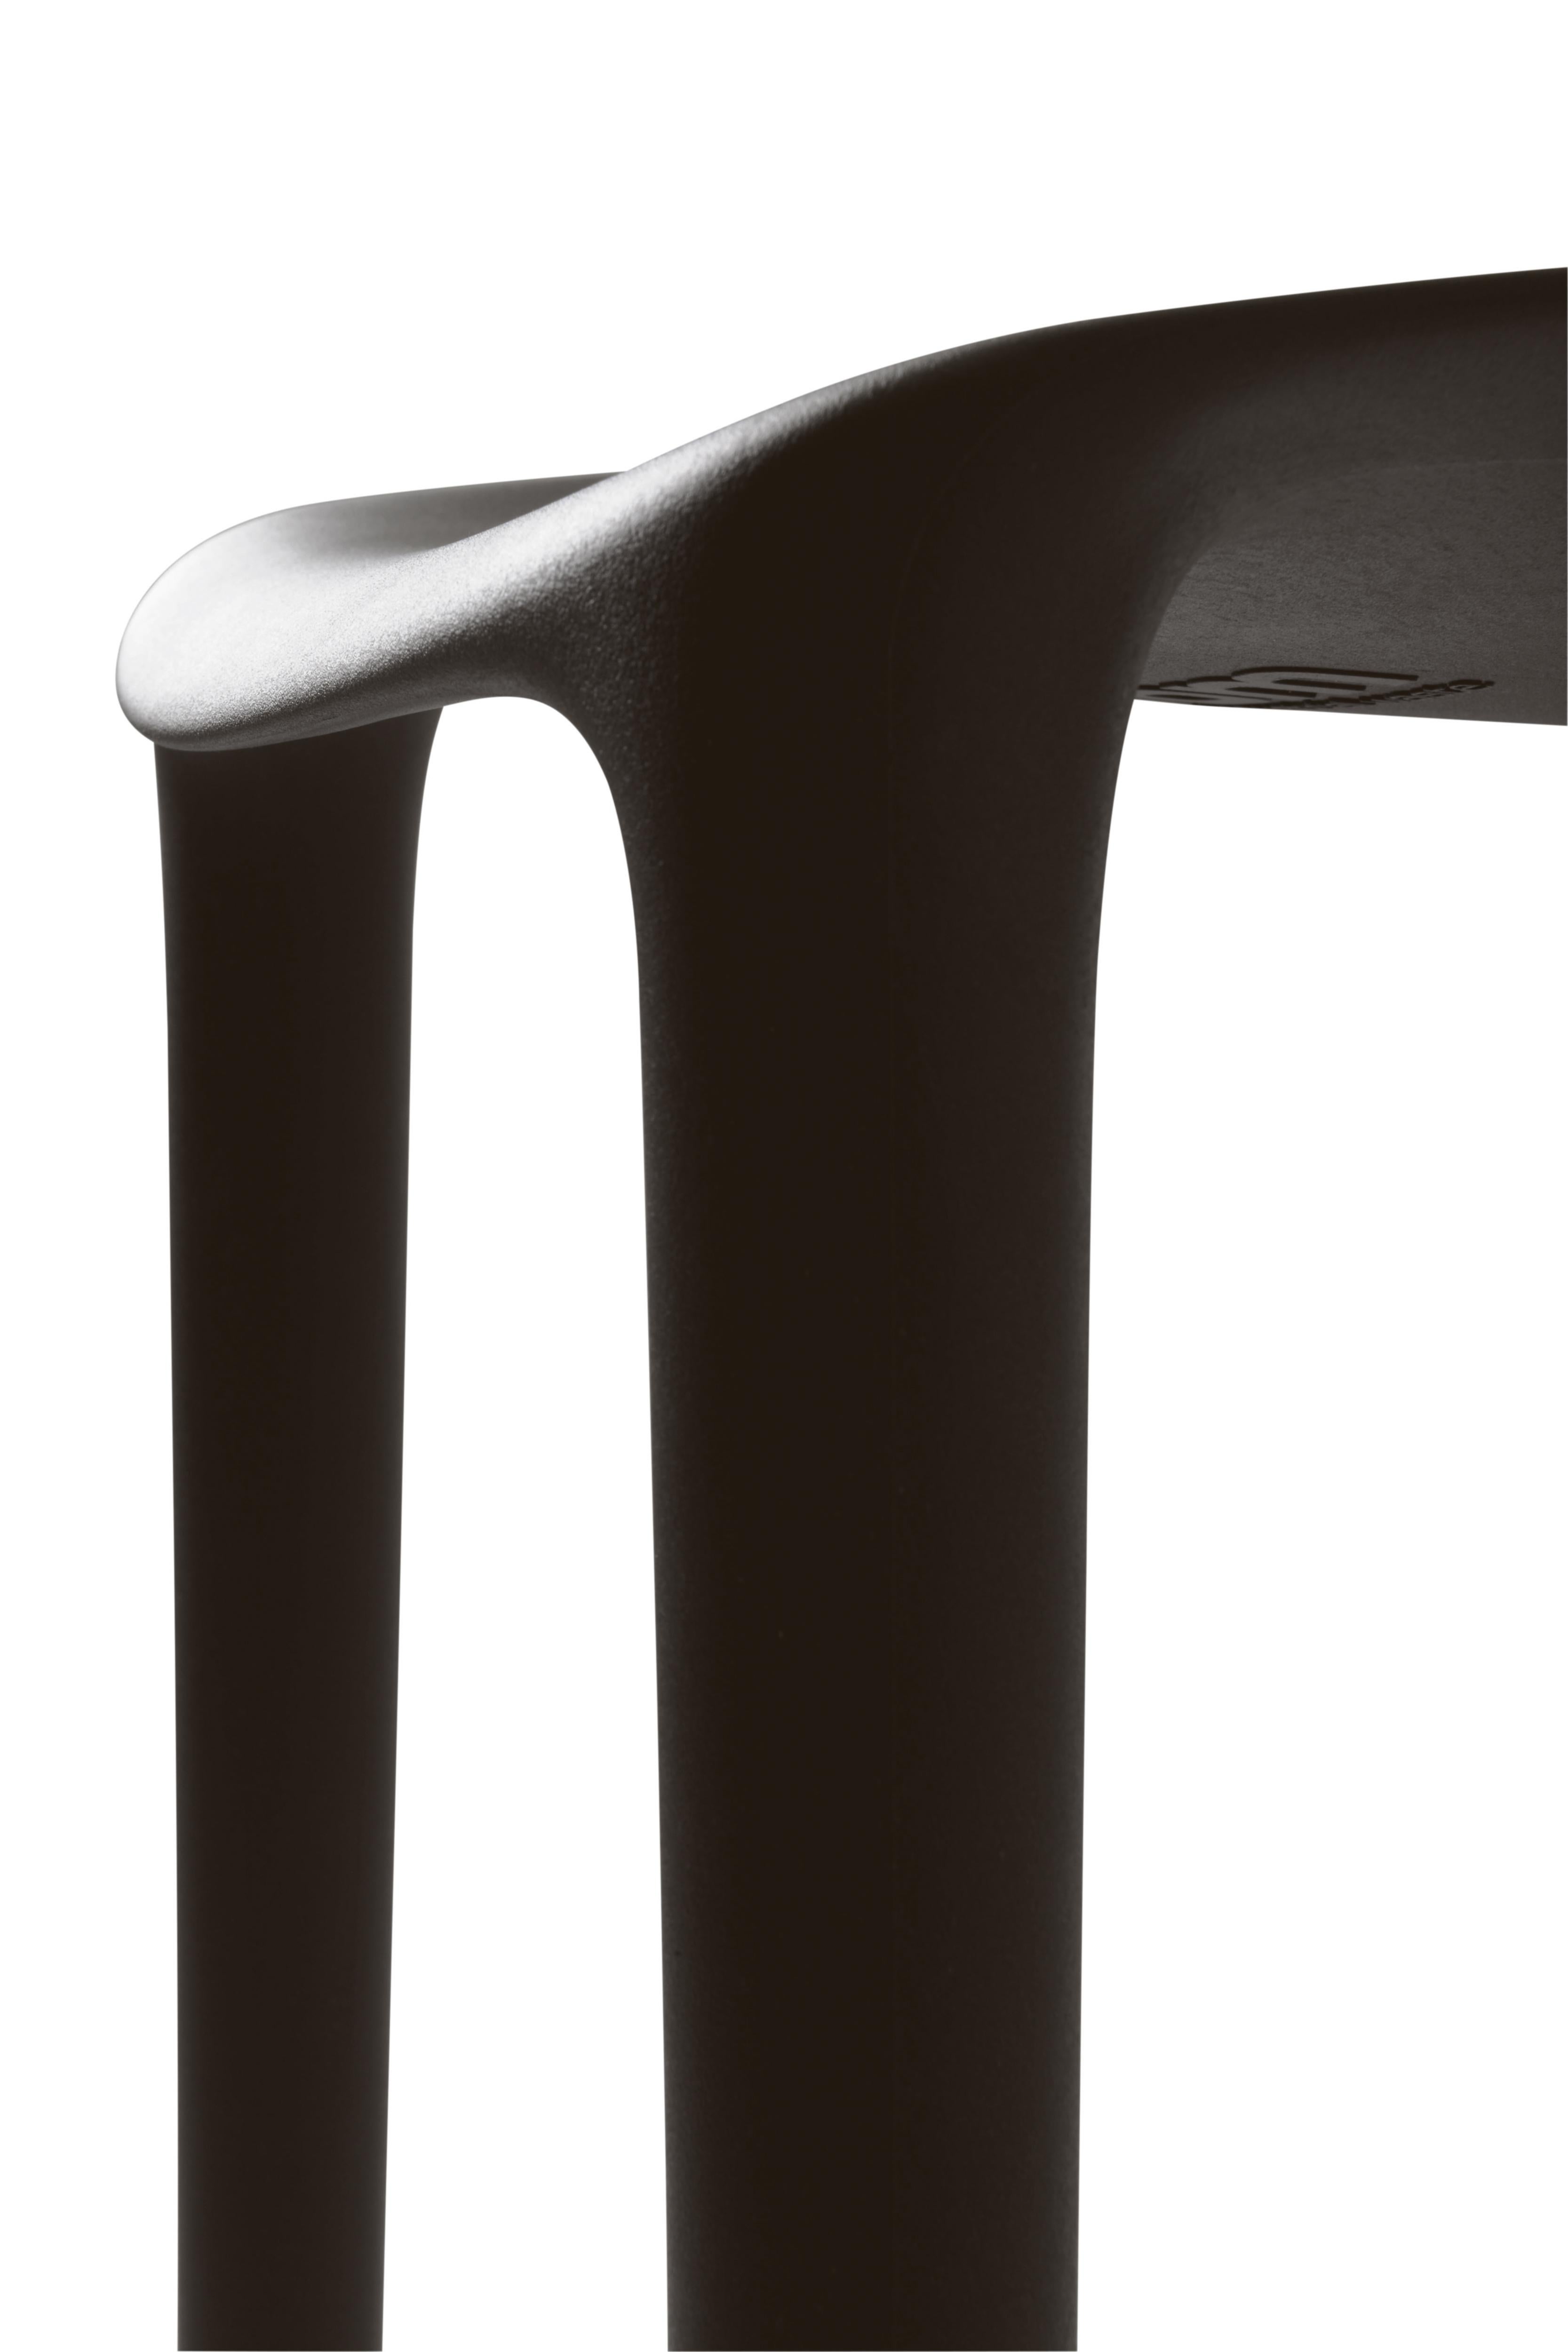 Emeco Broom Stapelbarer Stuhl in Grün von Philippe Starck (Moderne) im Angebot